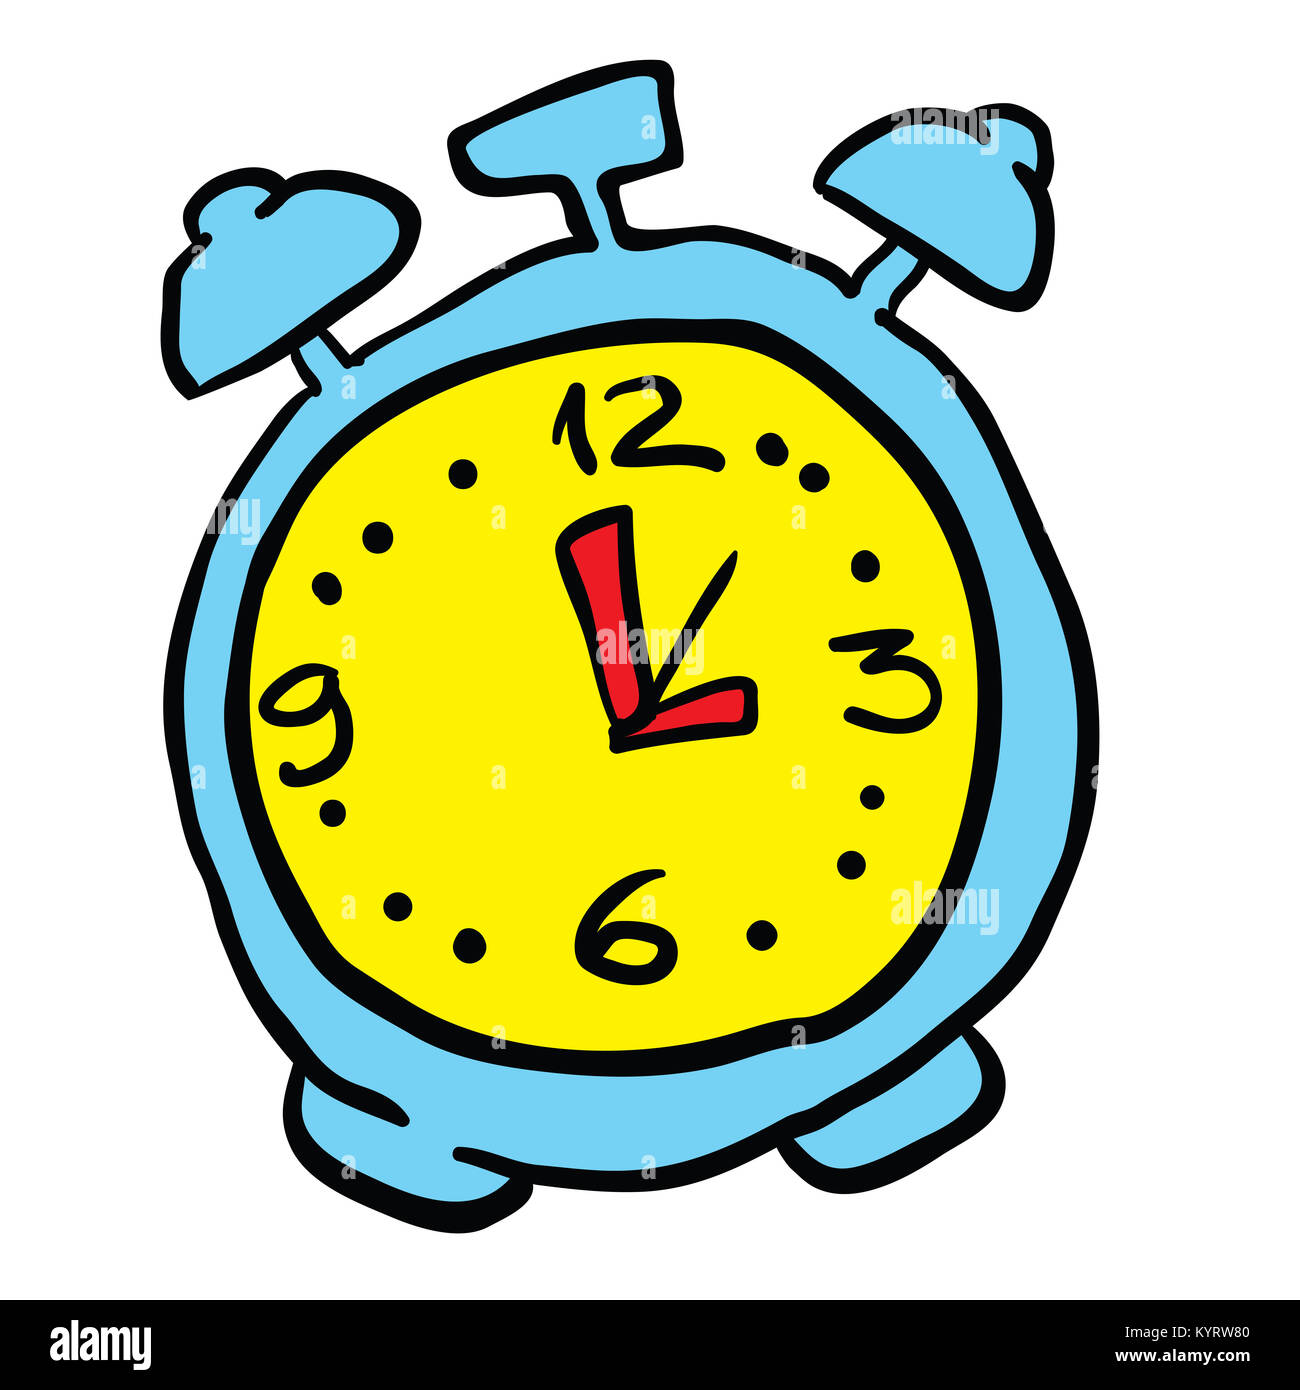 Reloj alarma cartoon Fotografía de stock - Alamy